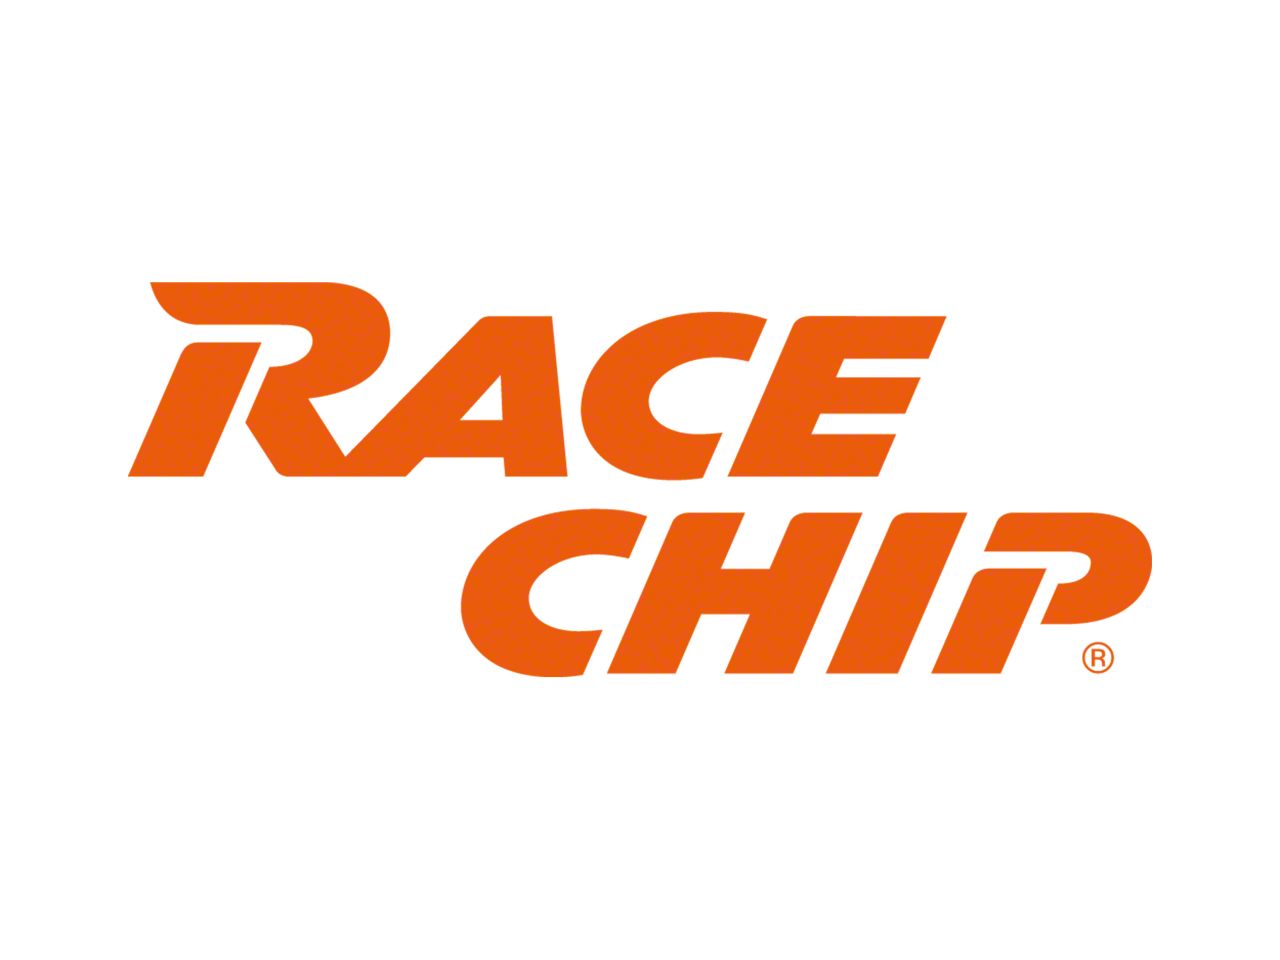 RaceChip Parts